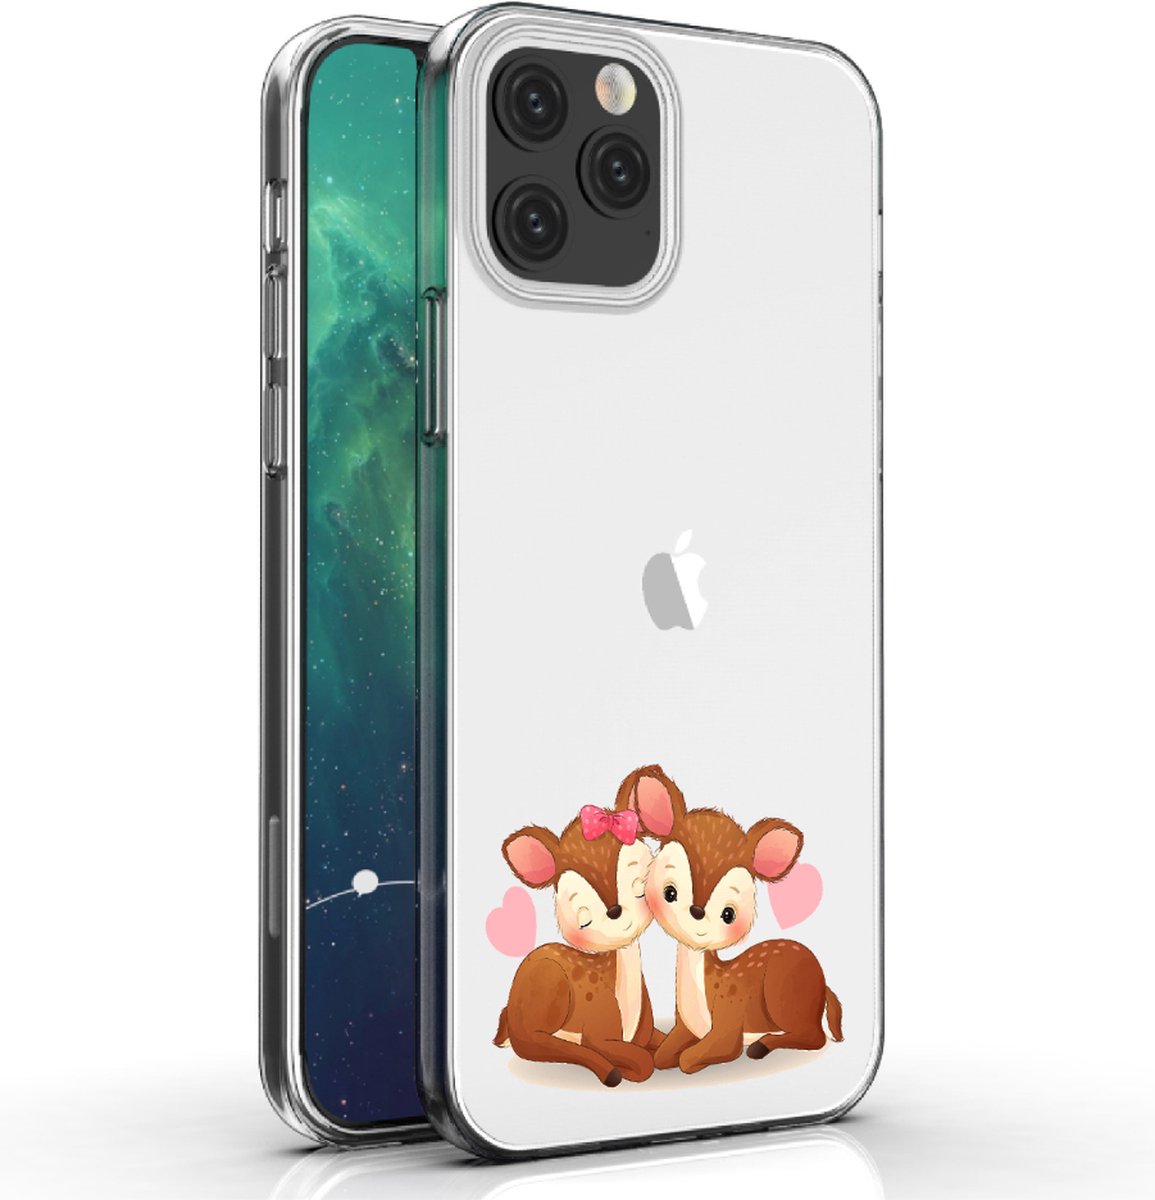 Apple Iphone 12 telefoonhoesje transparant siliconen hoesje - Hertjes